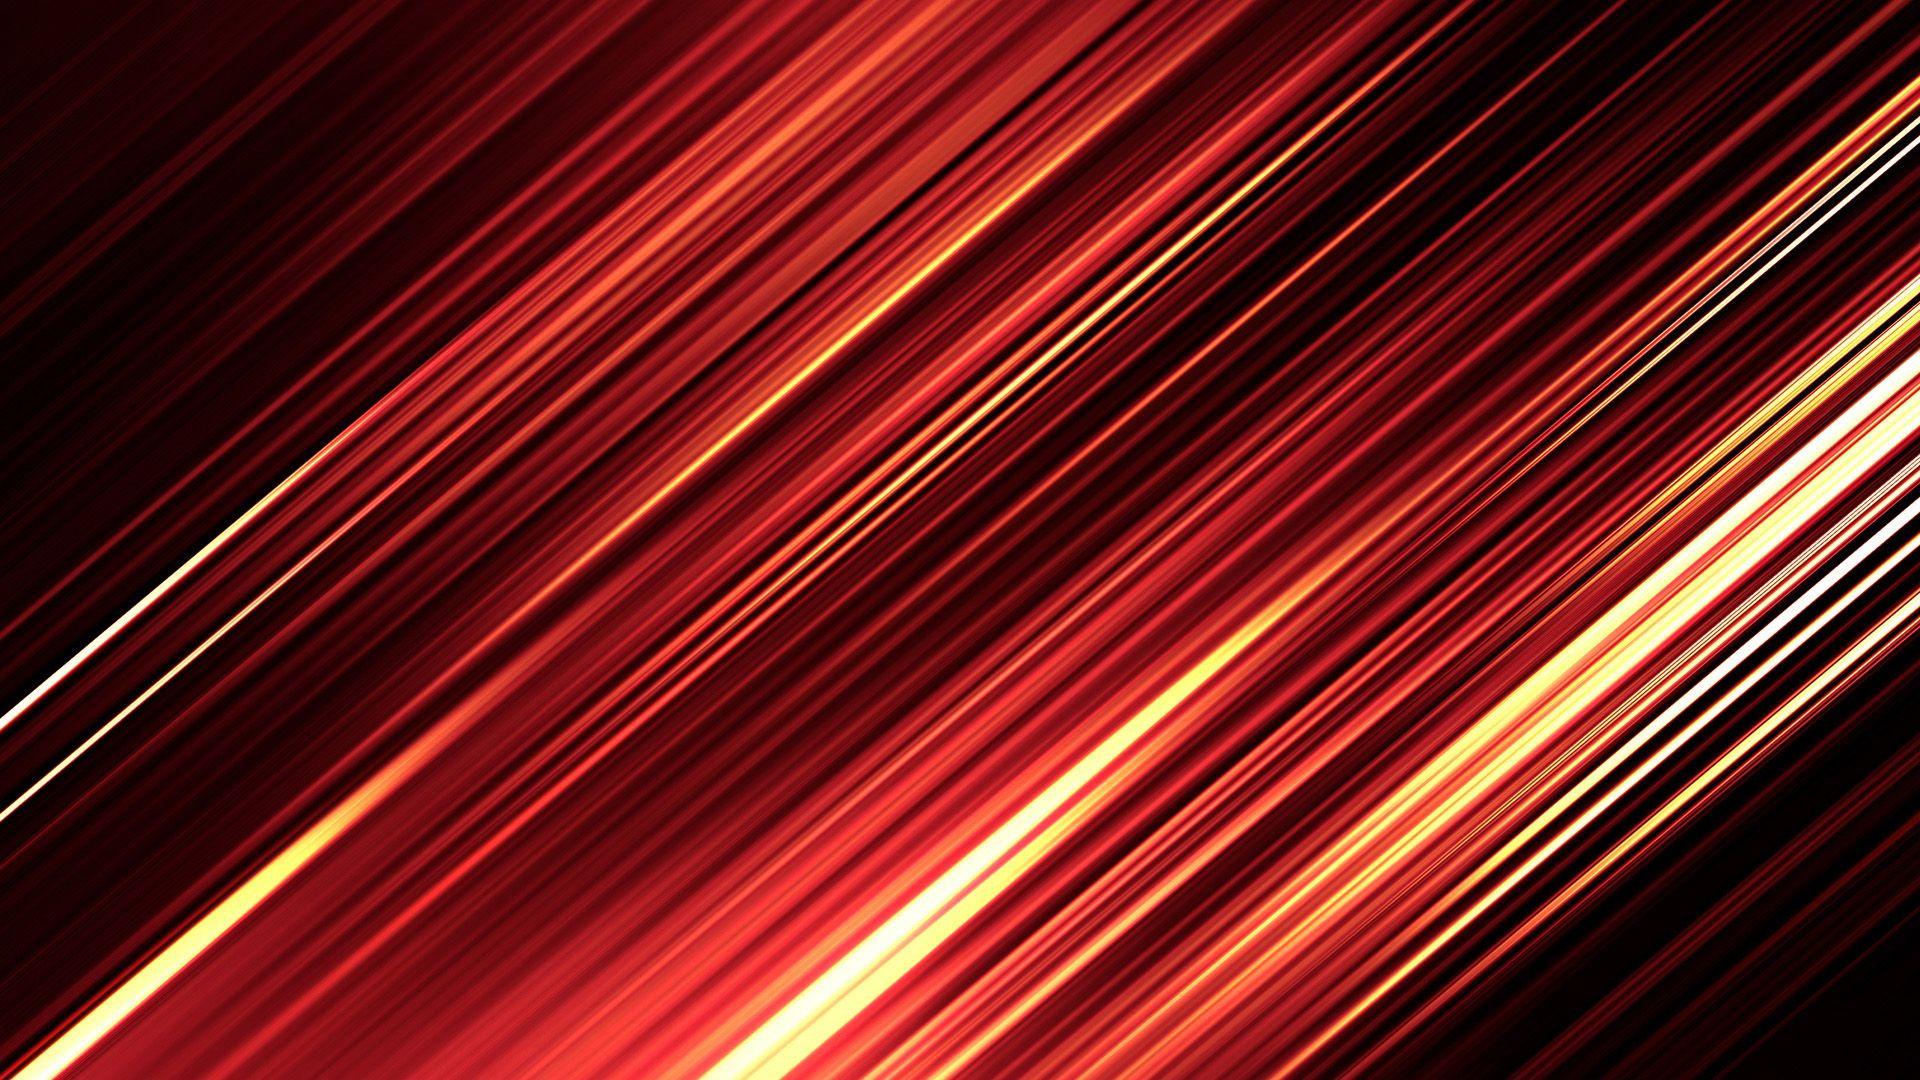 Metallic Red Wallpapers - Top Free Metallic Red Backgrounds ...